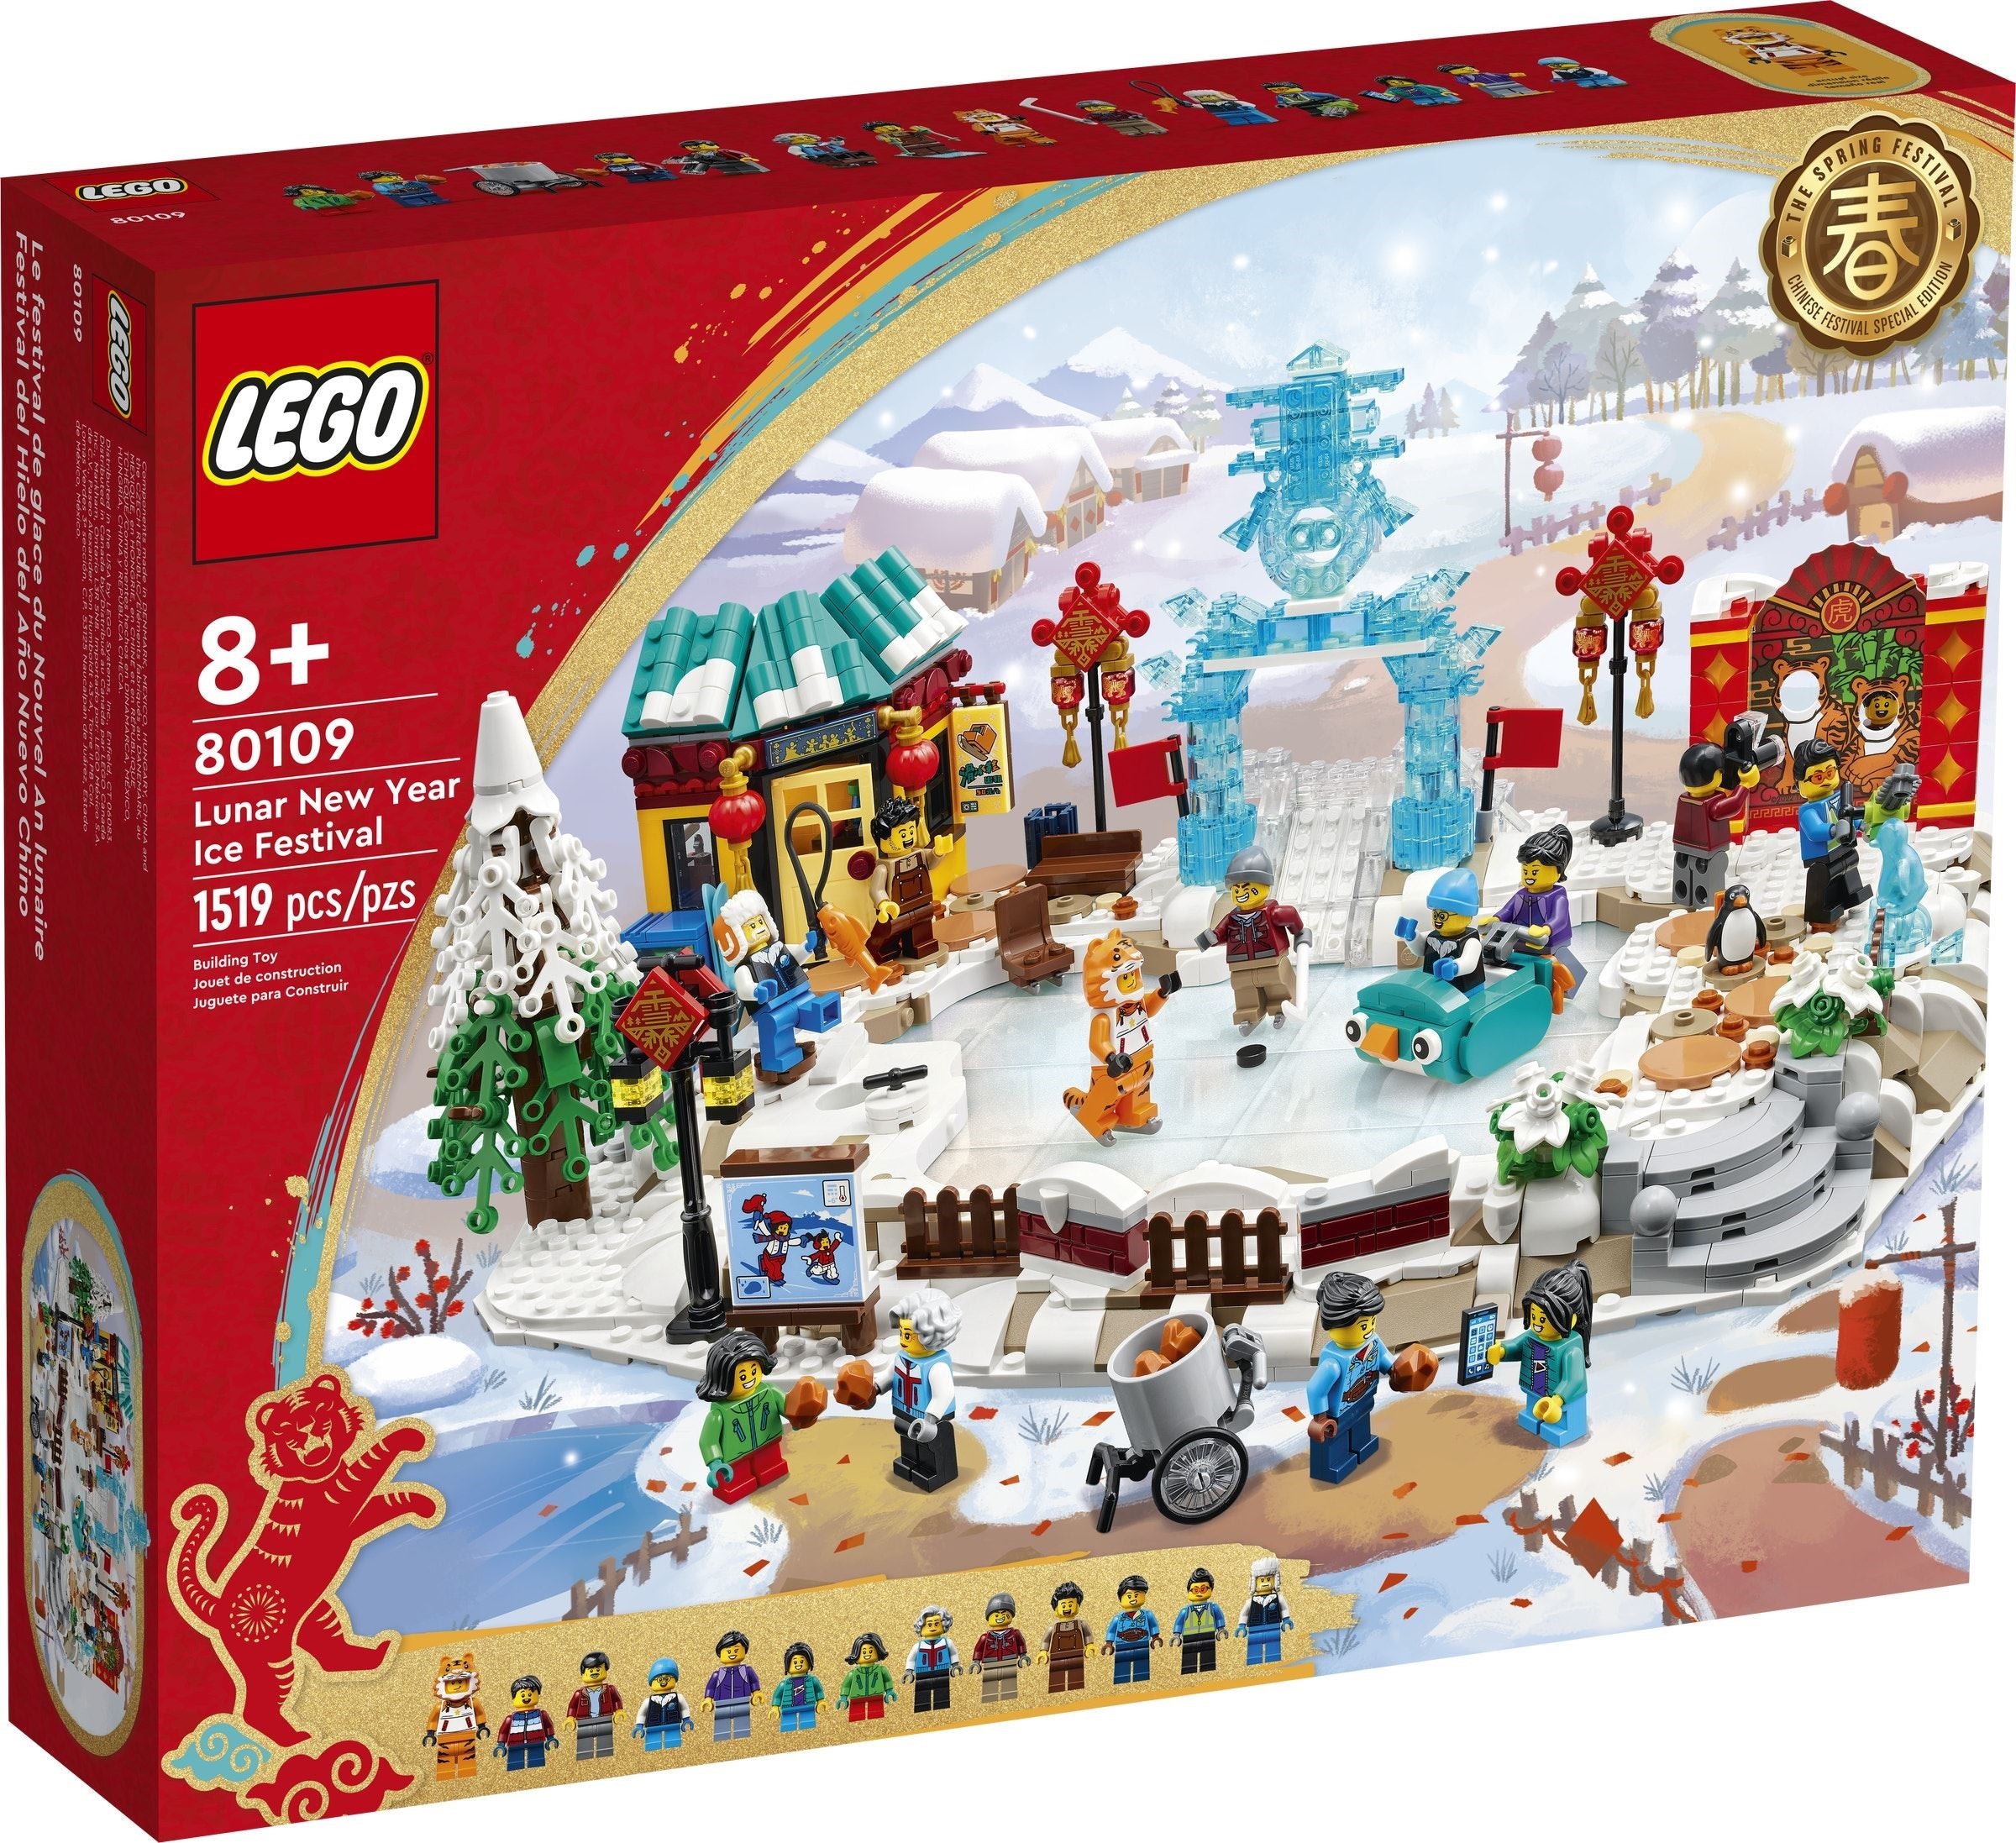 Lego Exclusive 80109 - Lunar New Year Ice Festival